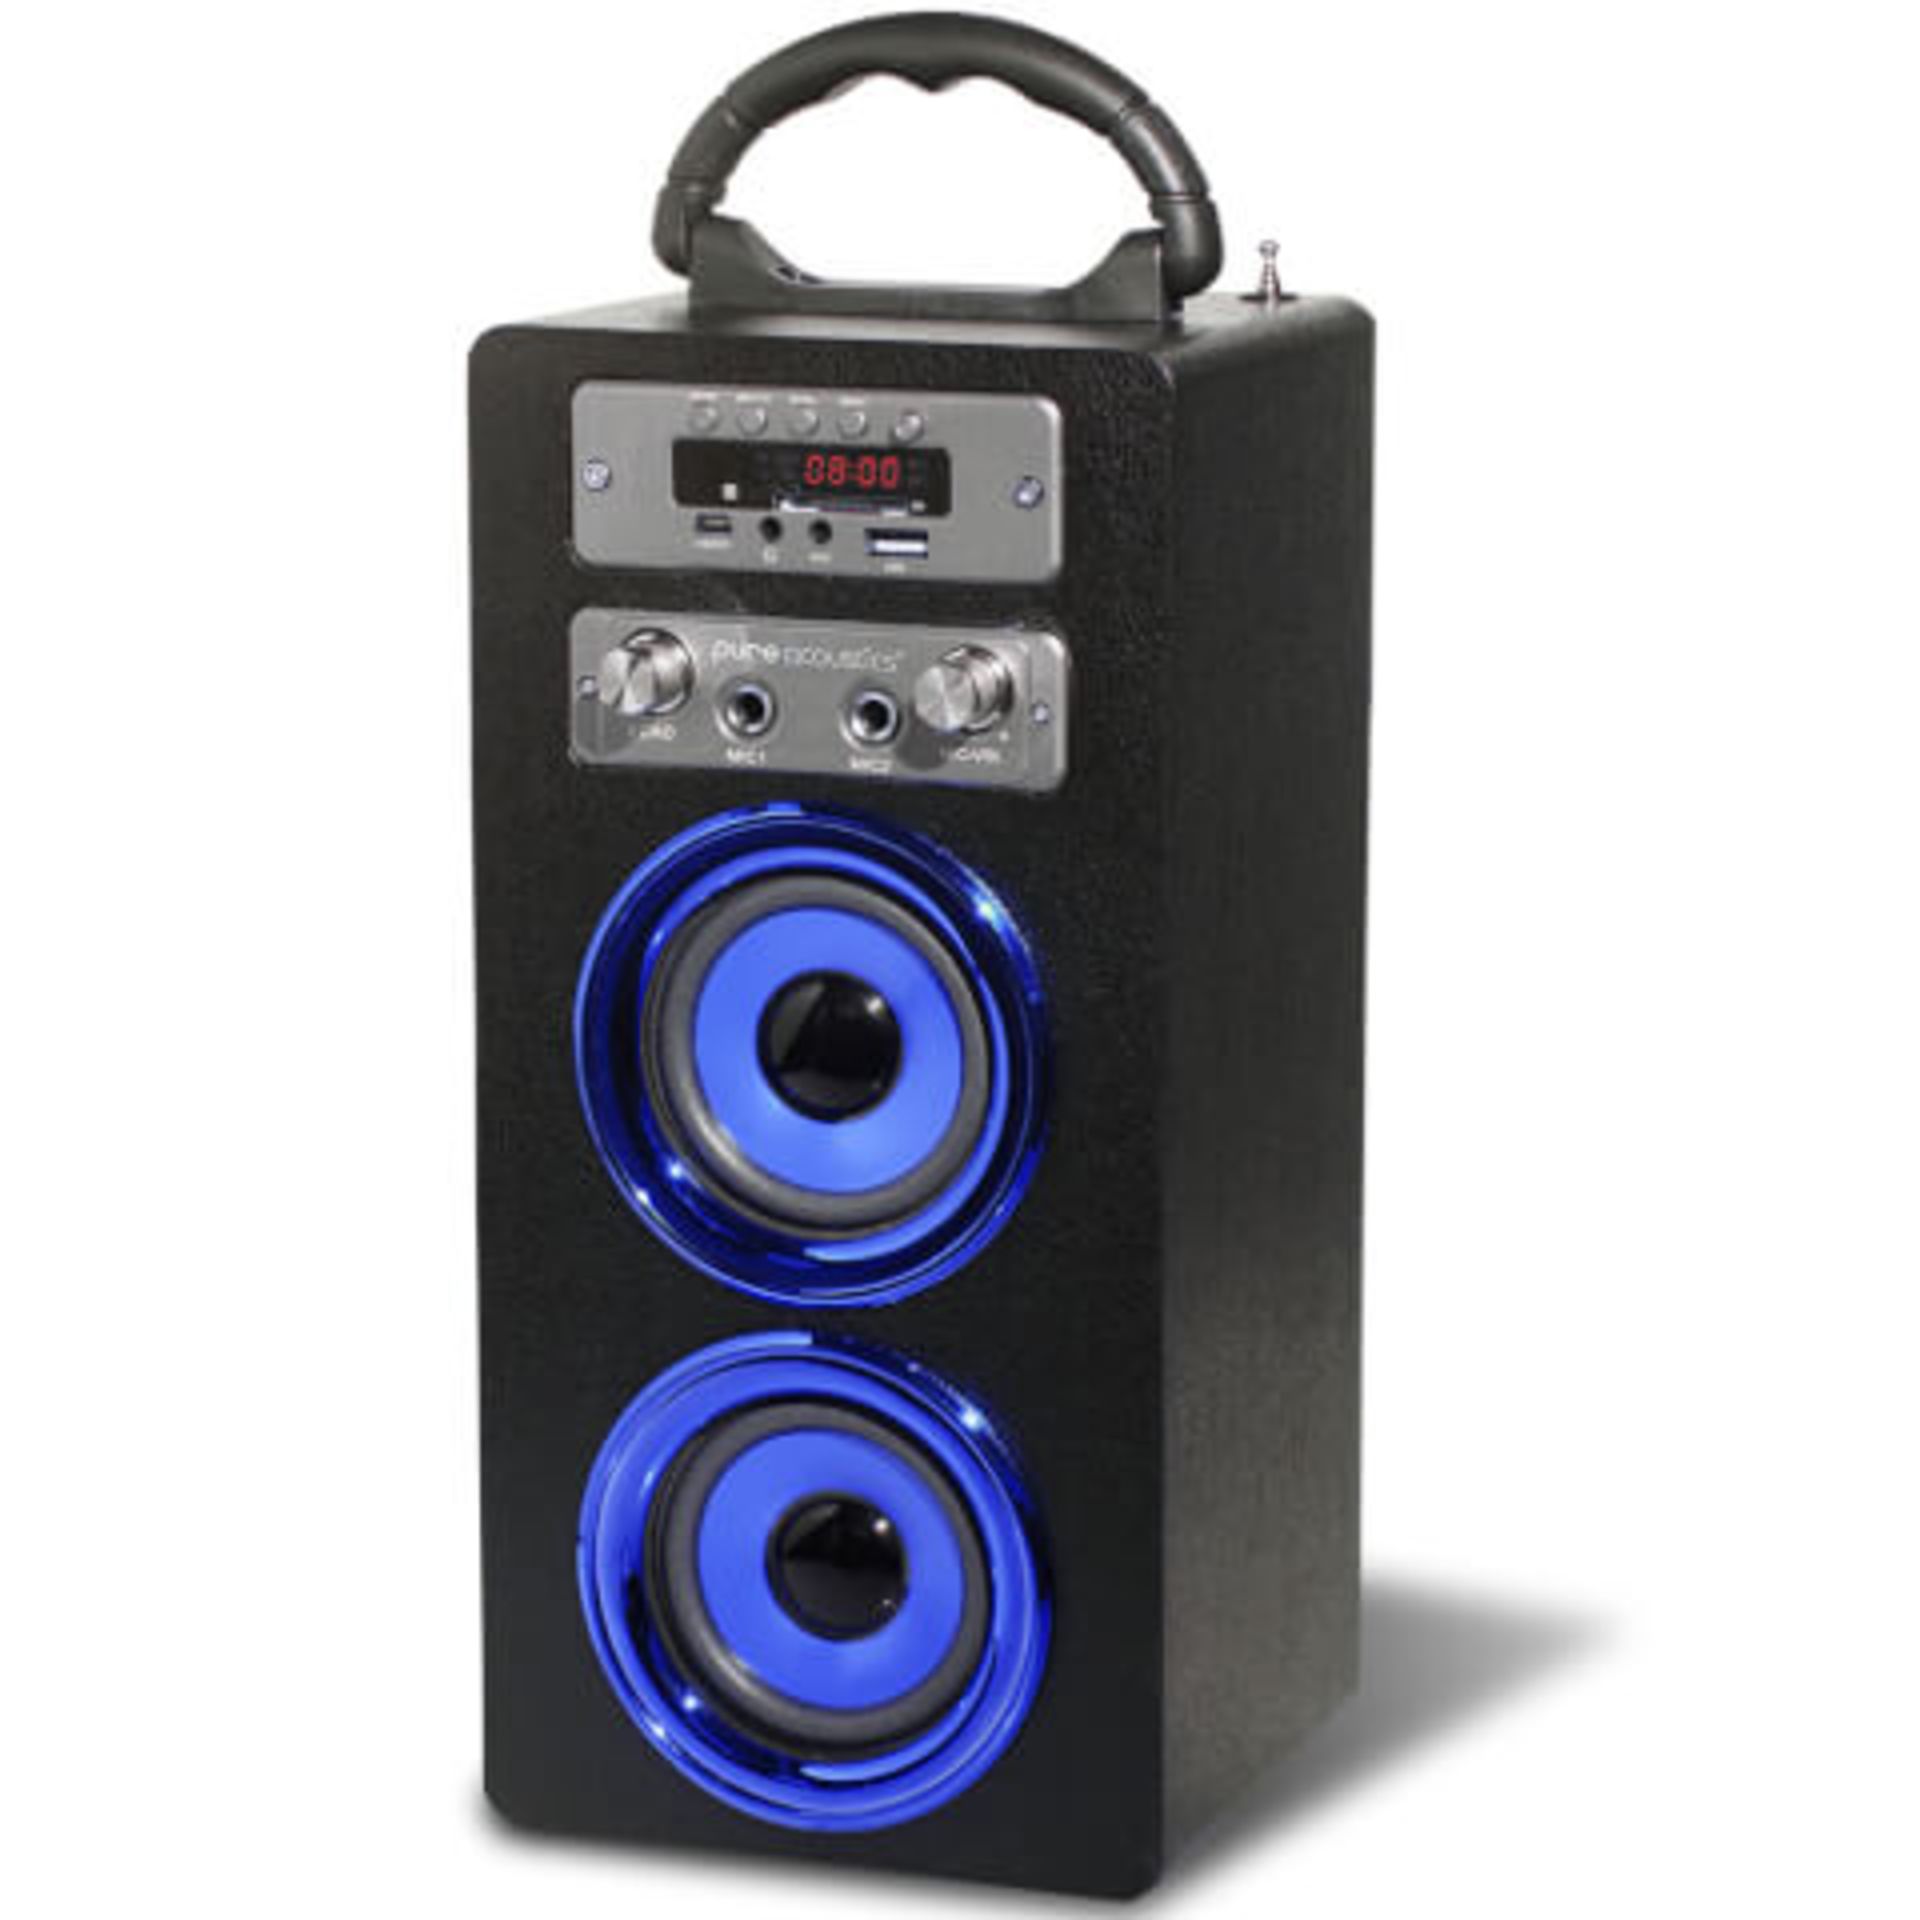 V *TRADE QTY* Brand New Pure Acoustics MCP-20BT Portable Karaoke Machine-Excellent Sound Quality-